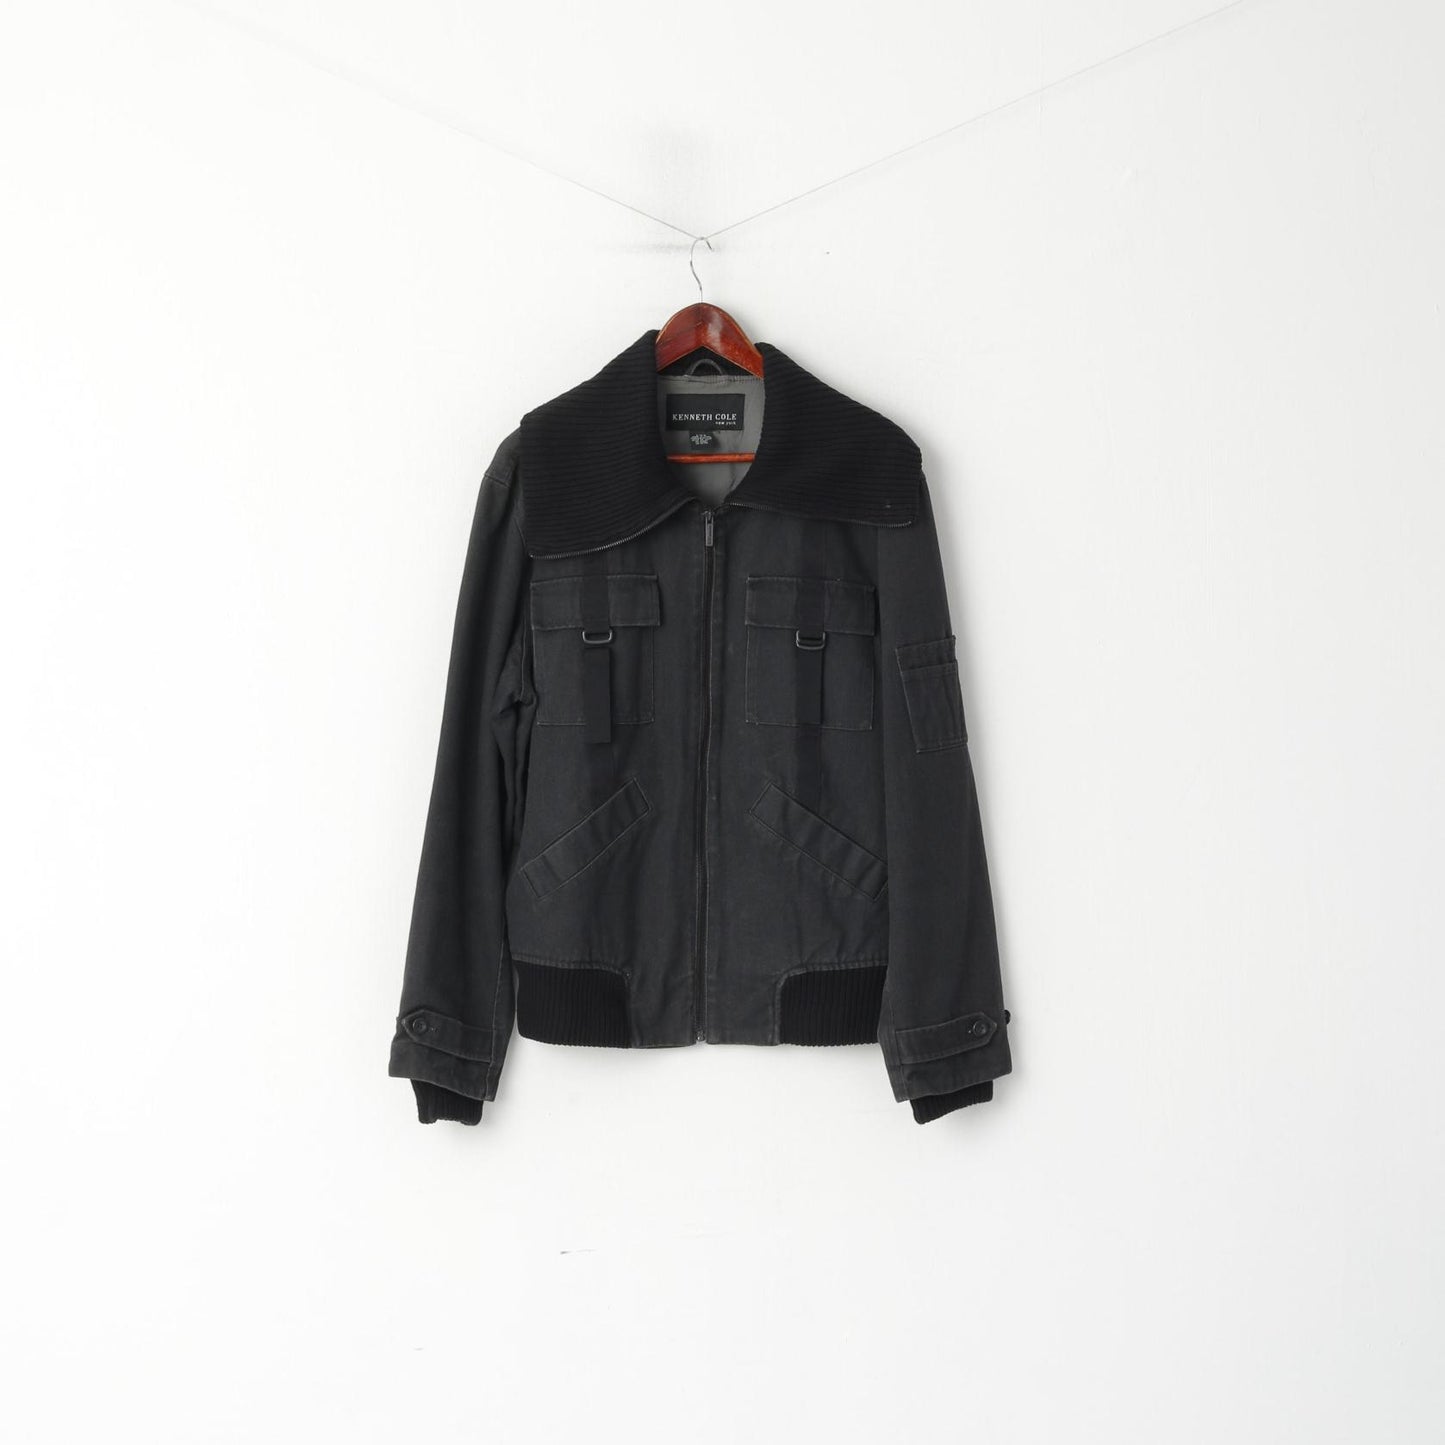 Kenneth Cole Men L Jacket Black Cotton Denim Full Zipper Multi Pockets Casual Top